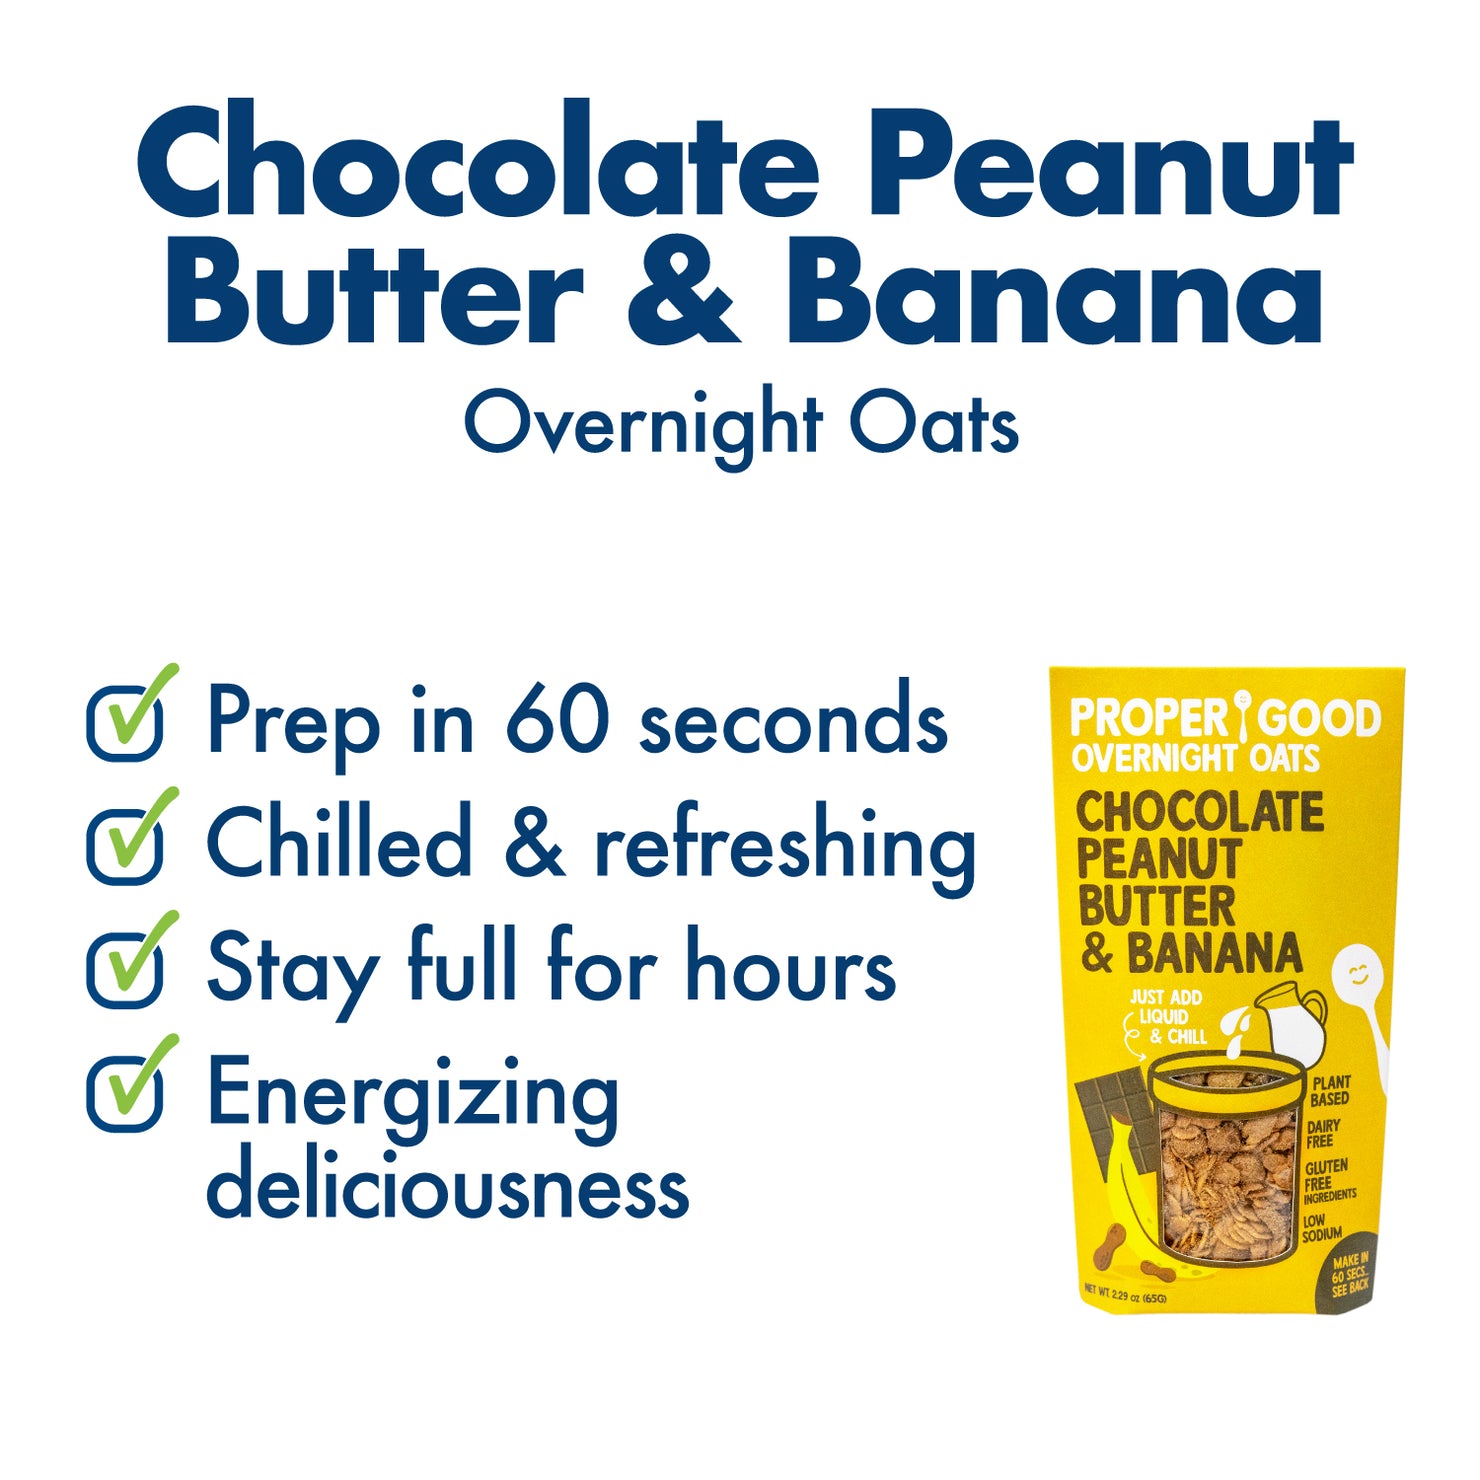 Chocolate, Peanut Butter & Banana Overnight Oats Benefits - Eat Proper Good